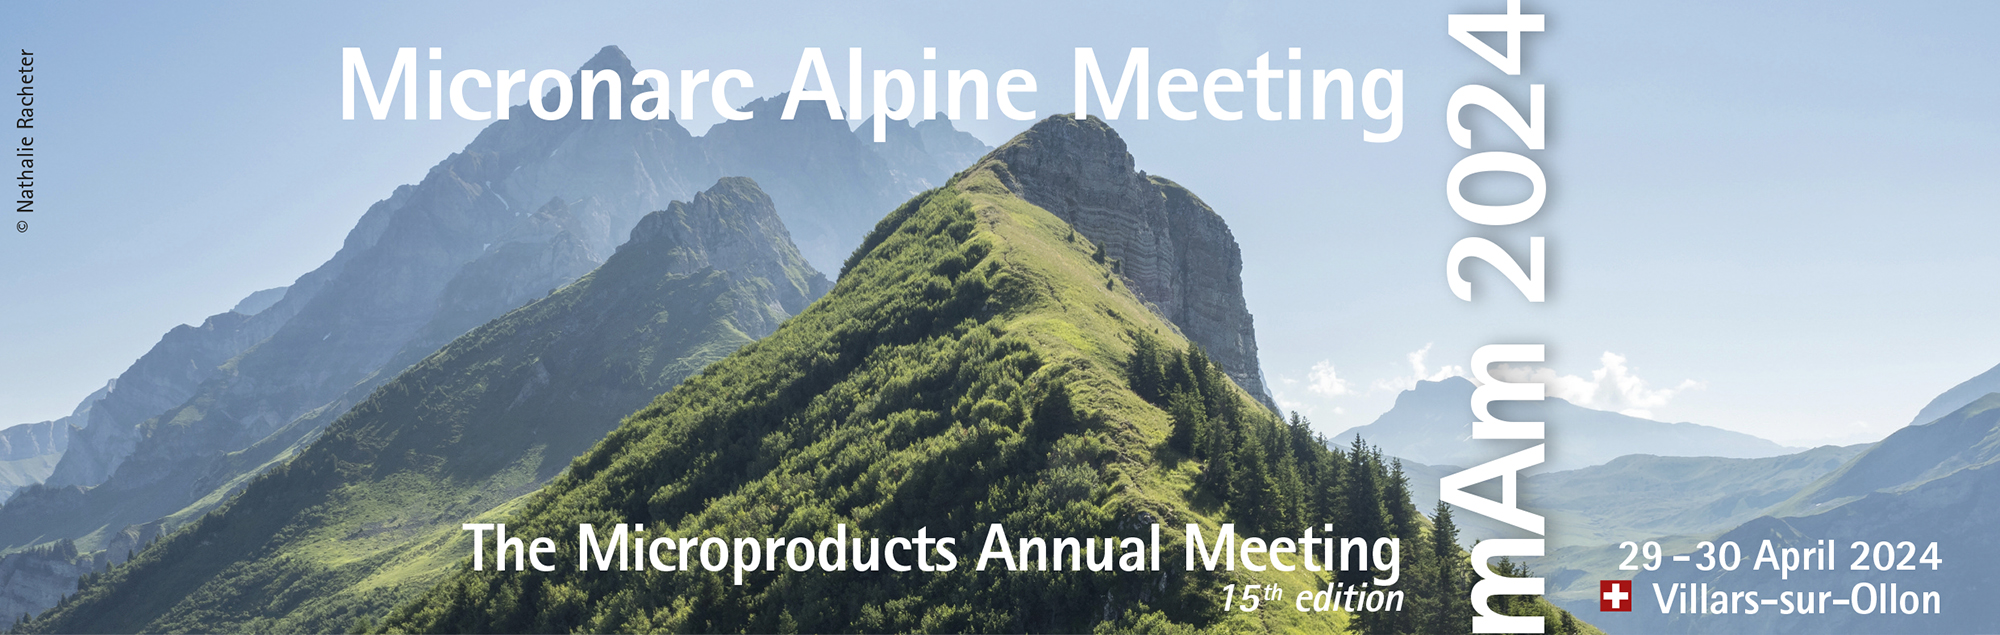 mAm 2024 – Micronarc Alpine Meeting